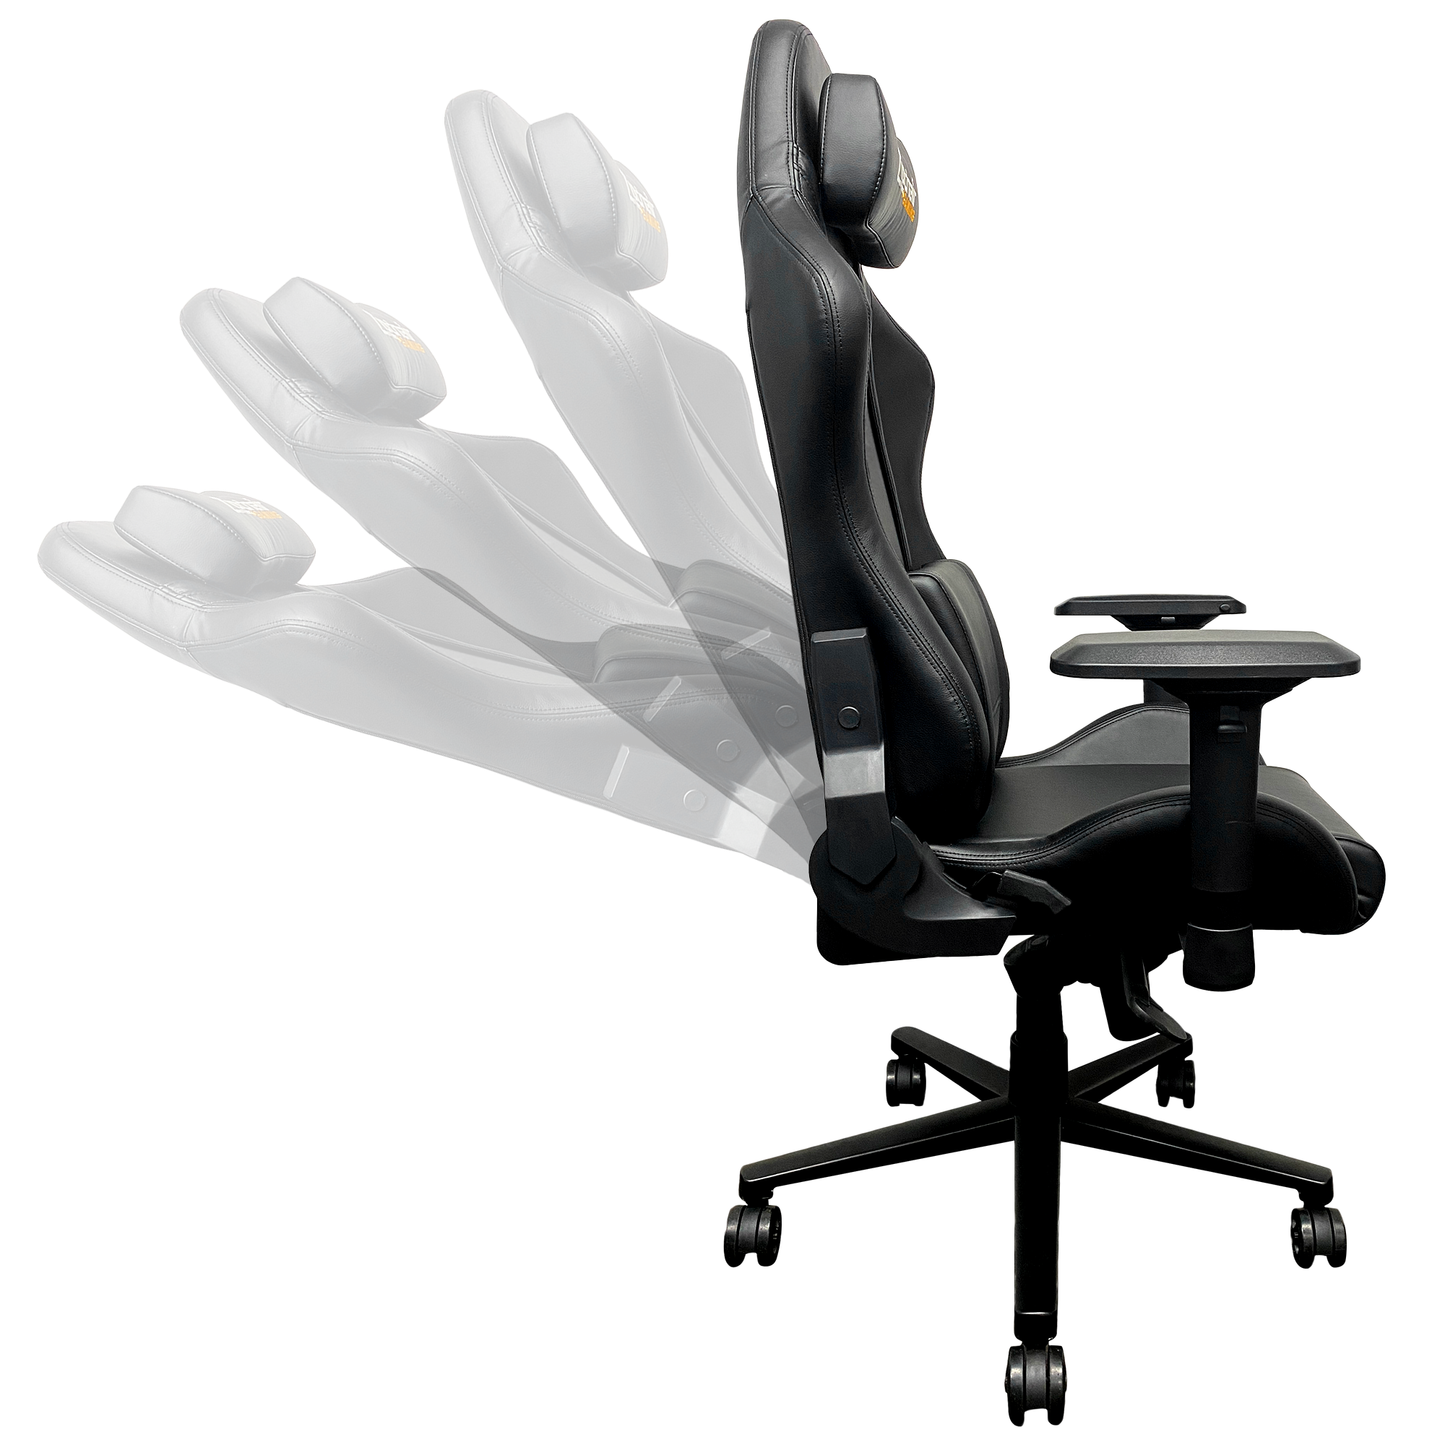 Xpression Pro Gaming Chair with Orlando Magic Gaming Logo